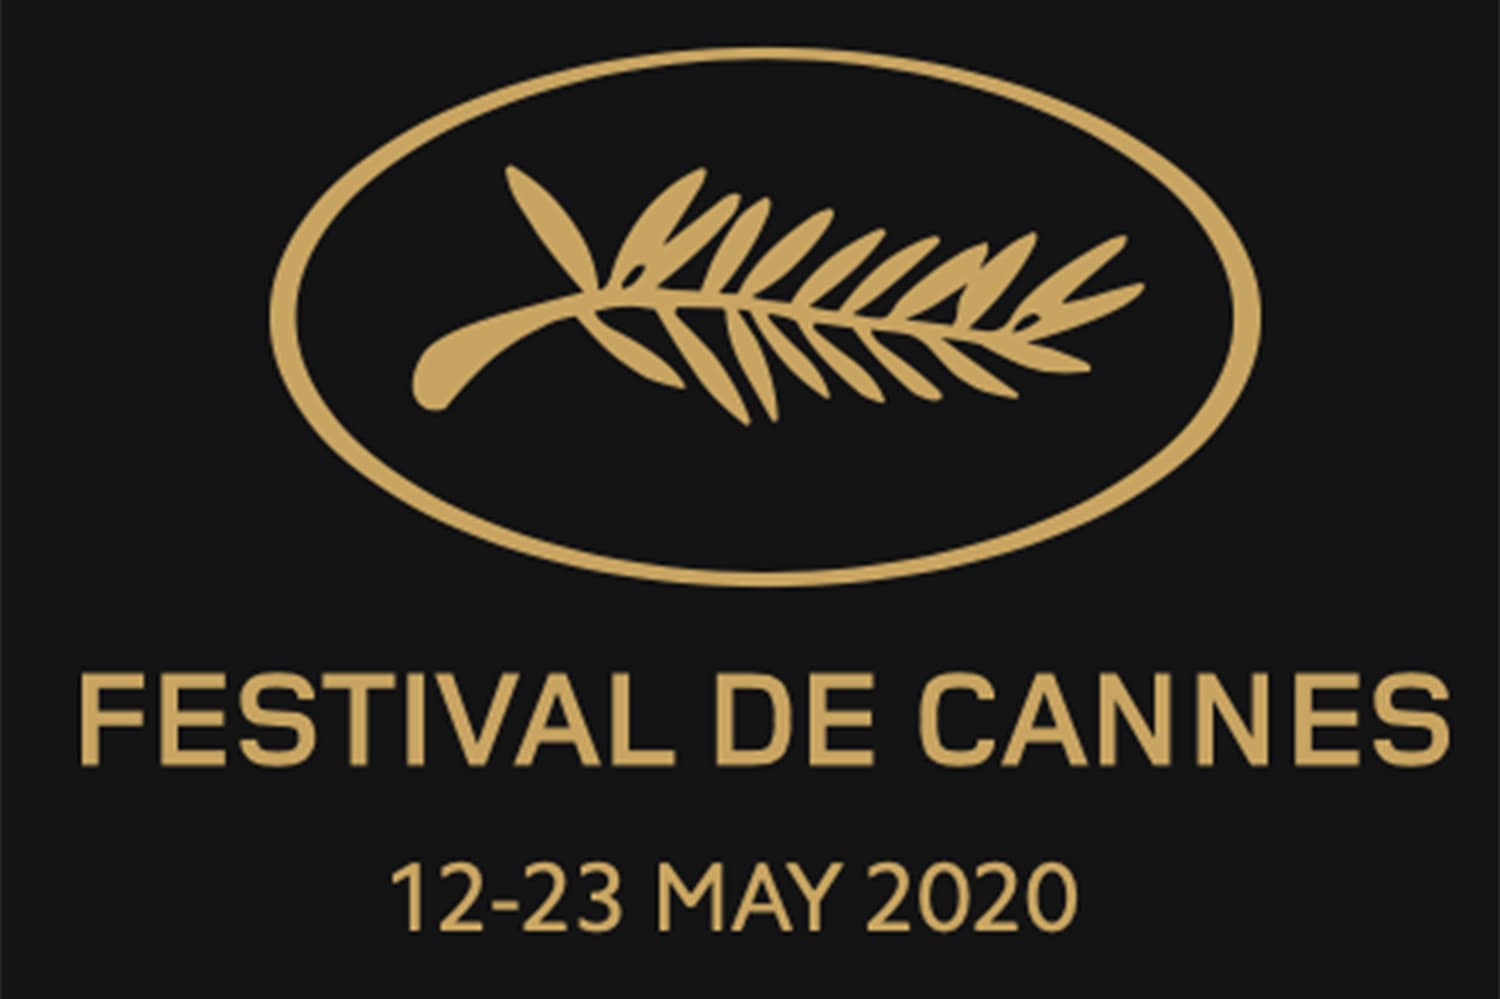 Cannes Film Festival postponed due to coronavirus